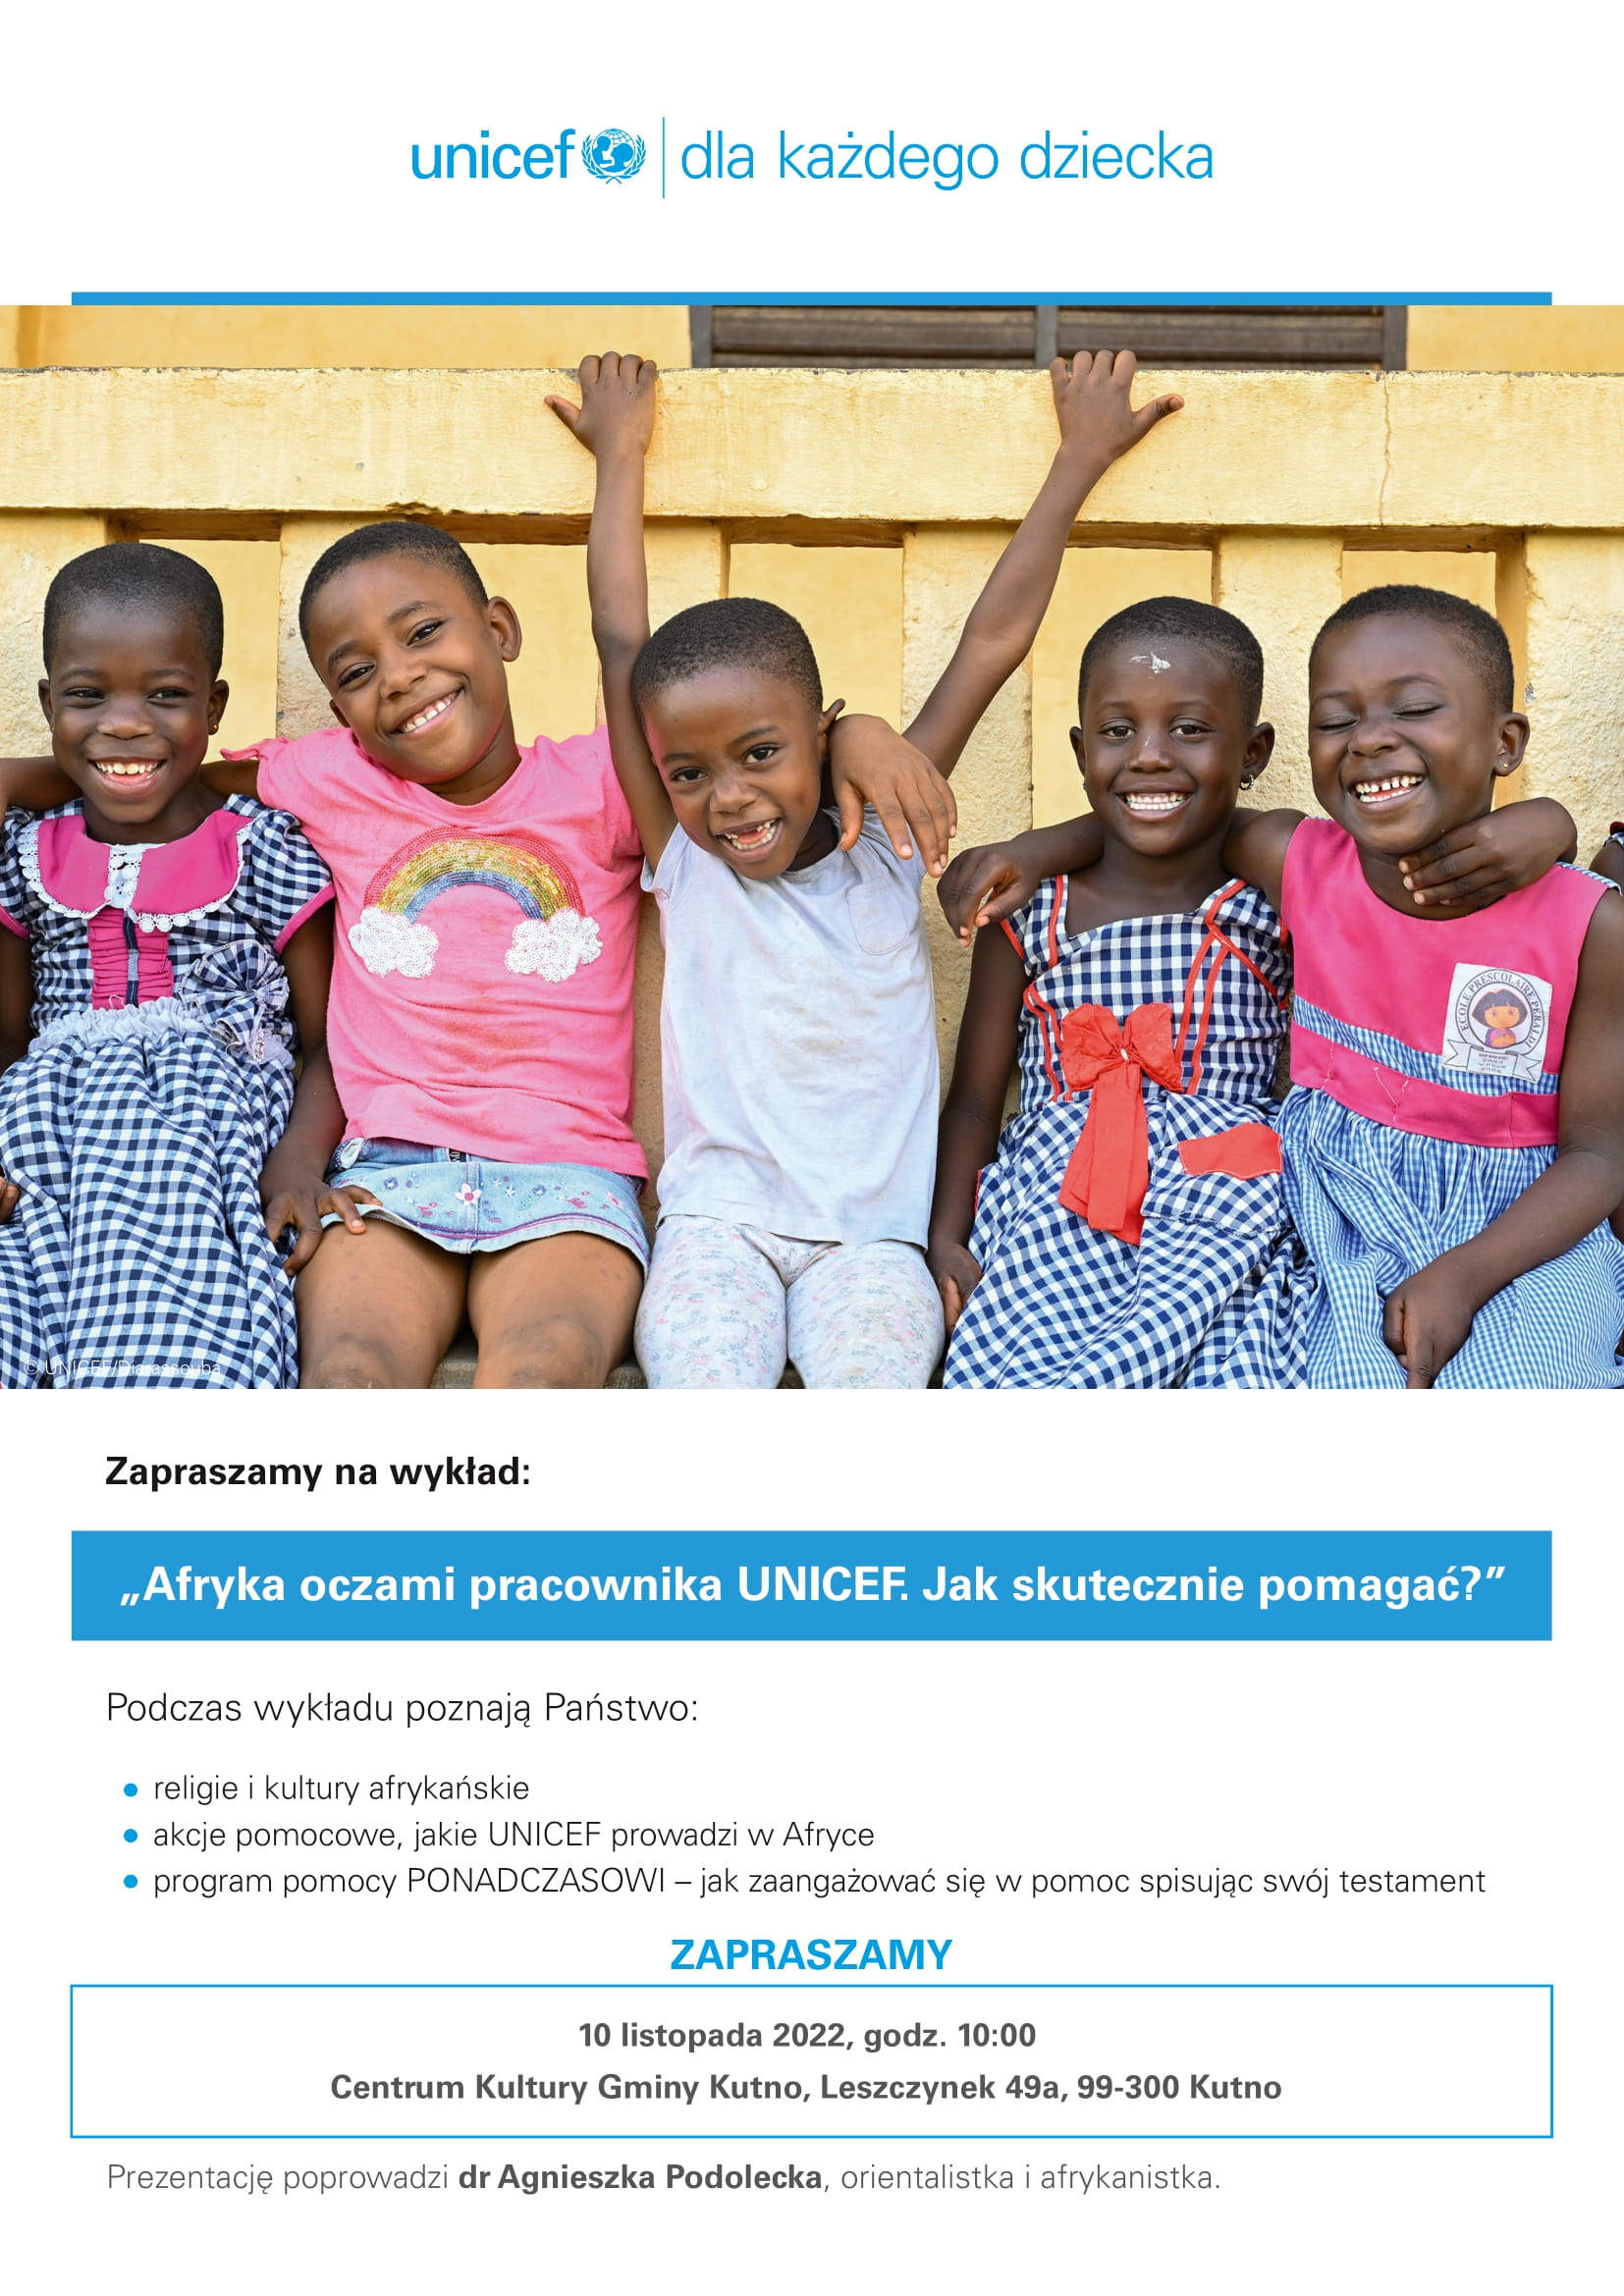 UNICEF Polska Ponadczasowi plakat A4 Kutno 1